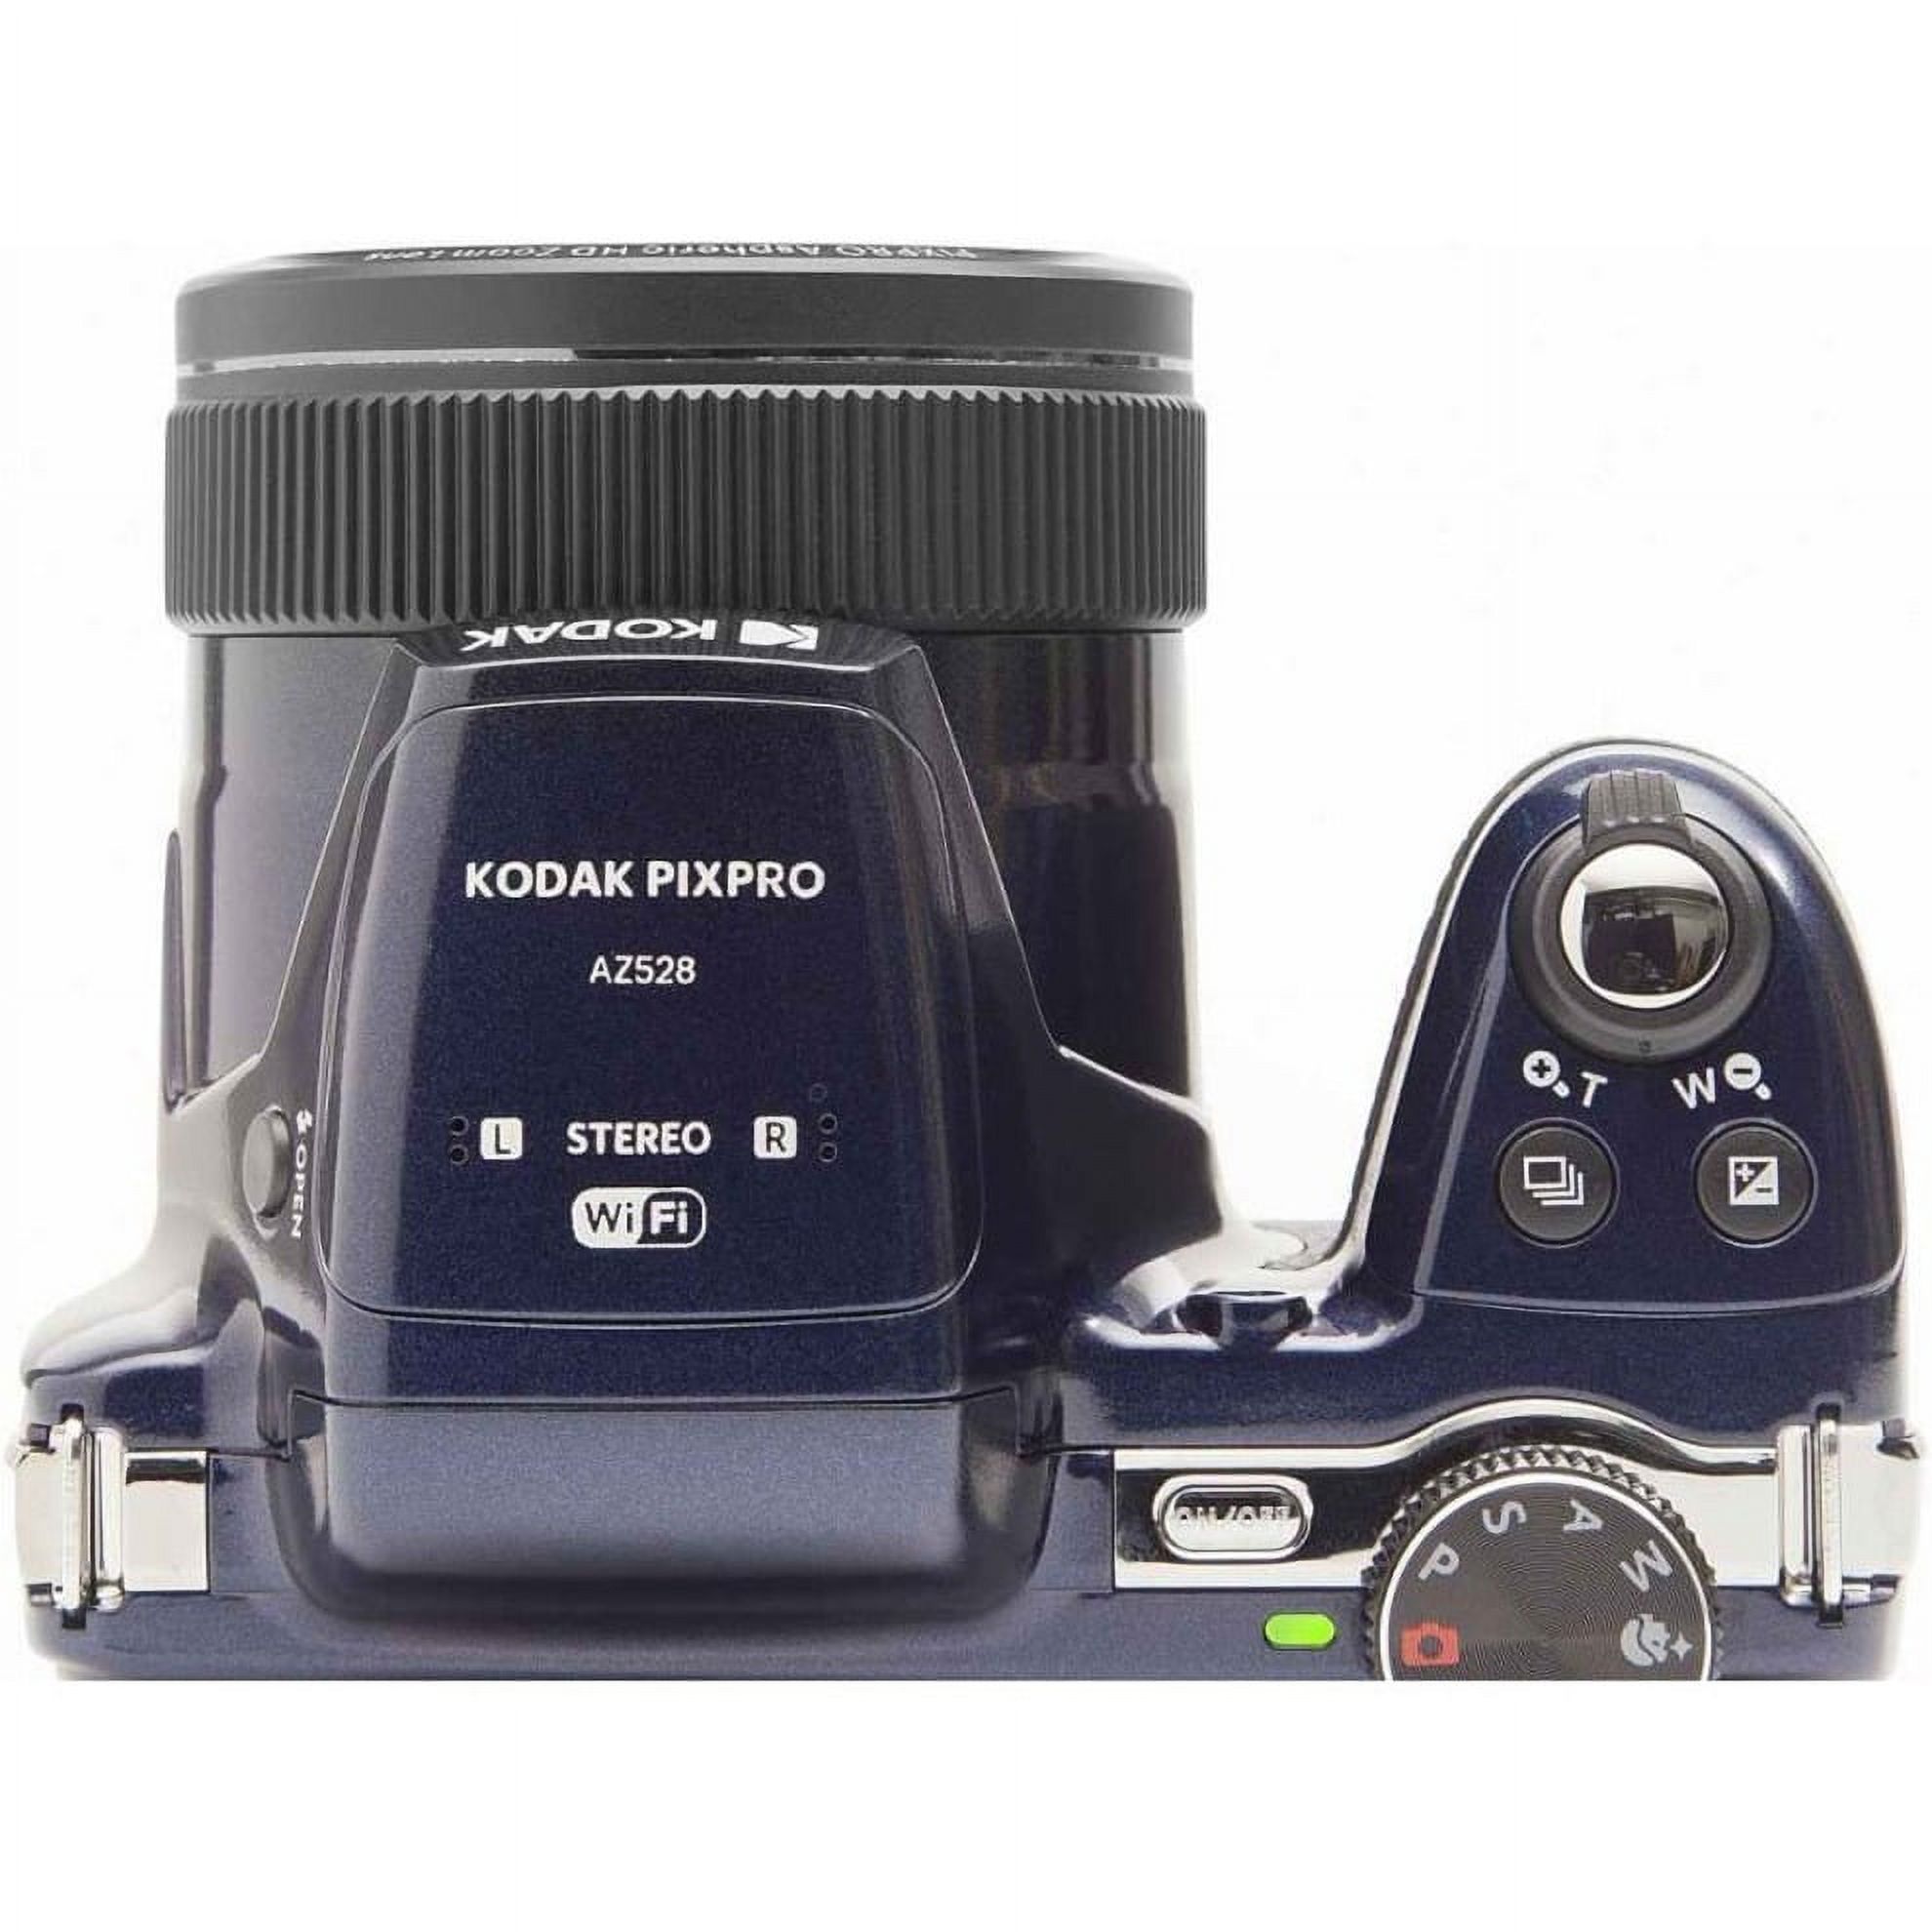 Kodak PIXPRO AZ528 16.4 Megapixel Bridge Camera, Blue - image 5 of 5